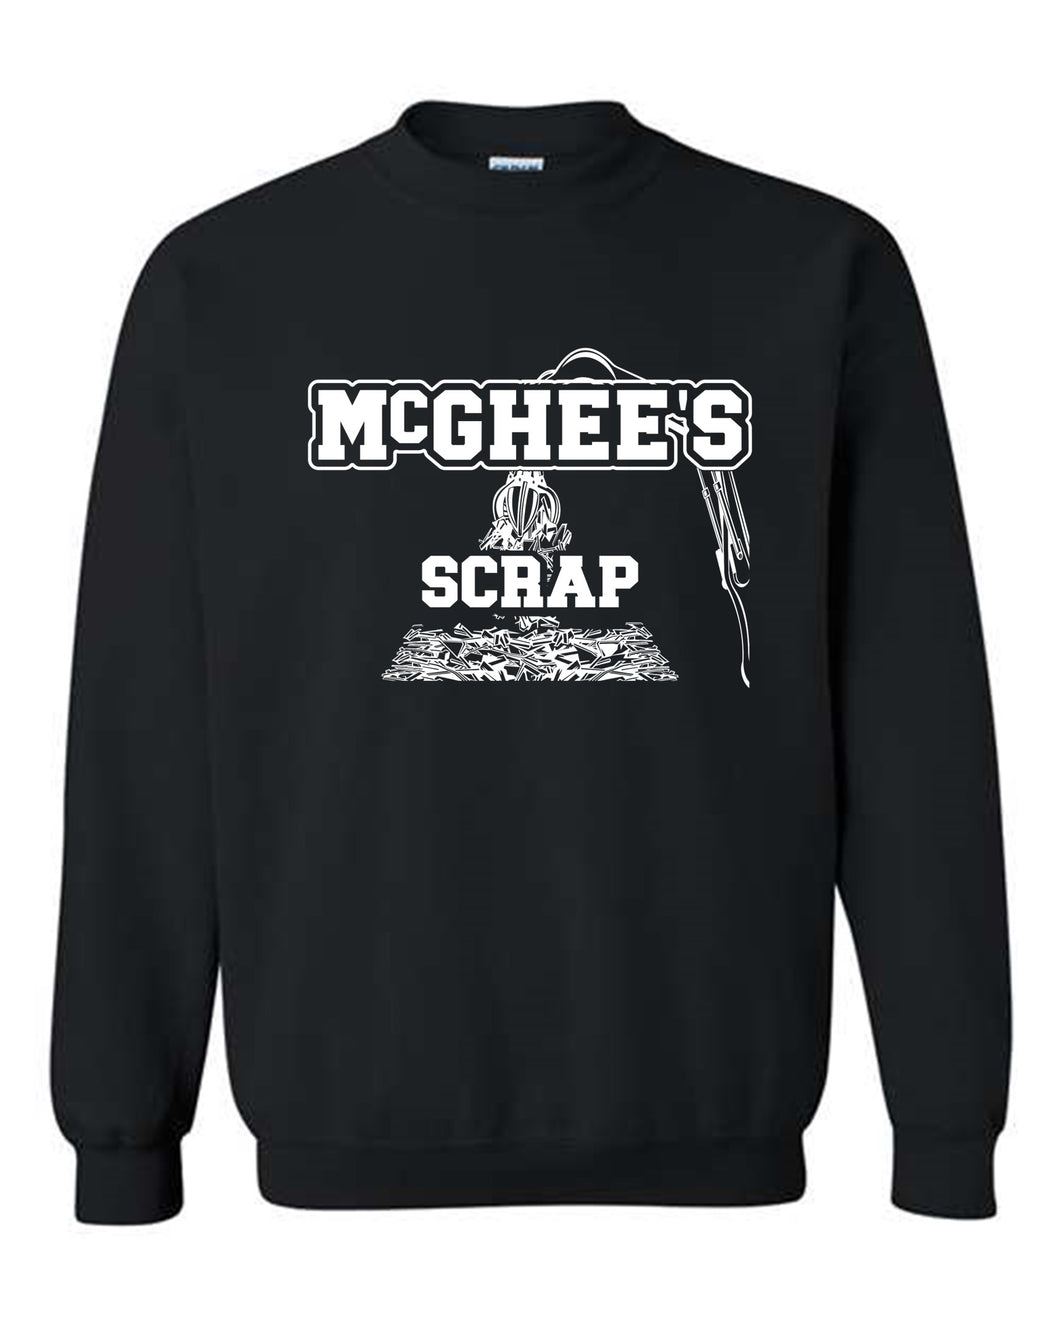 McGhee's Scrap Crewneck Sweatshirt - Youth and Adult